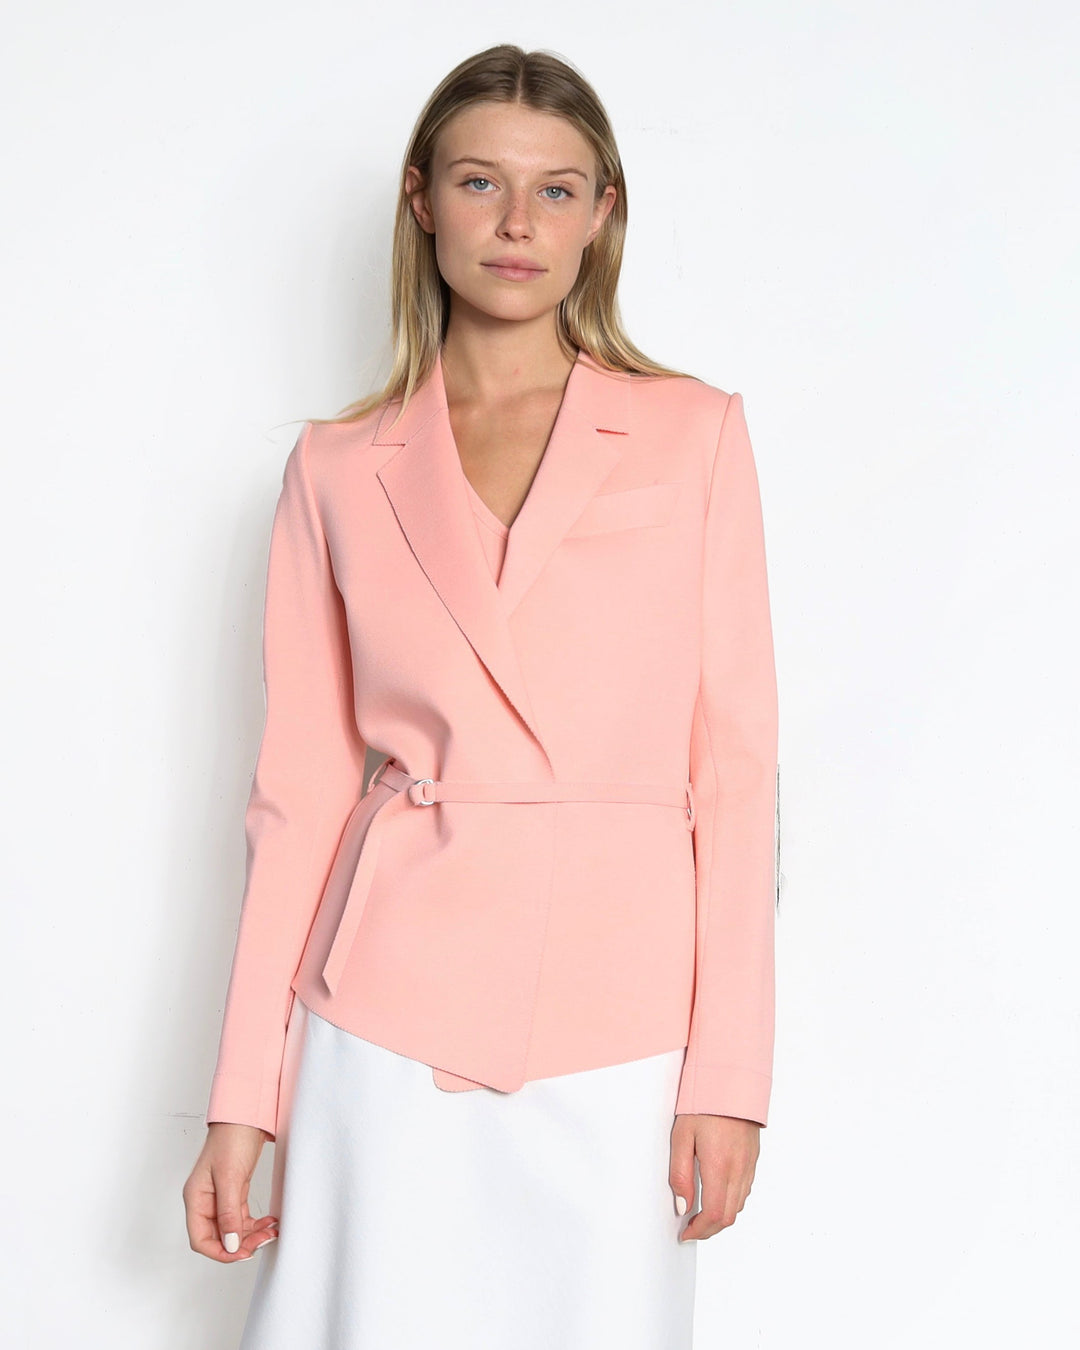 Maison Marie Saint Pierre | Jackets and Coats | ANNA | Light Pink